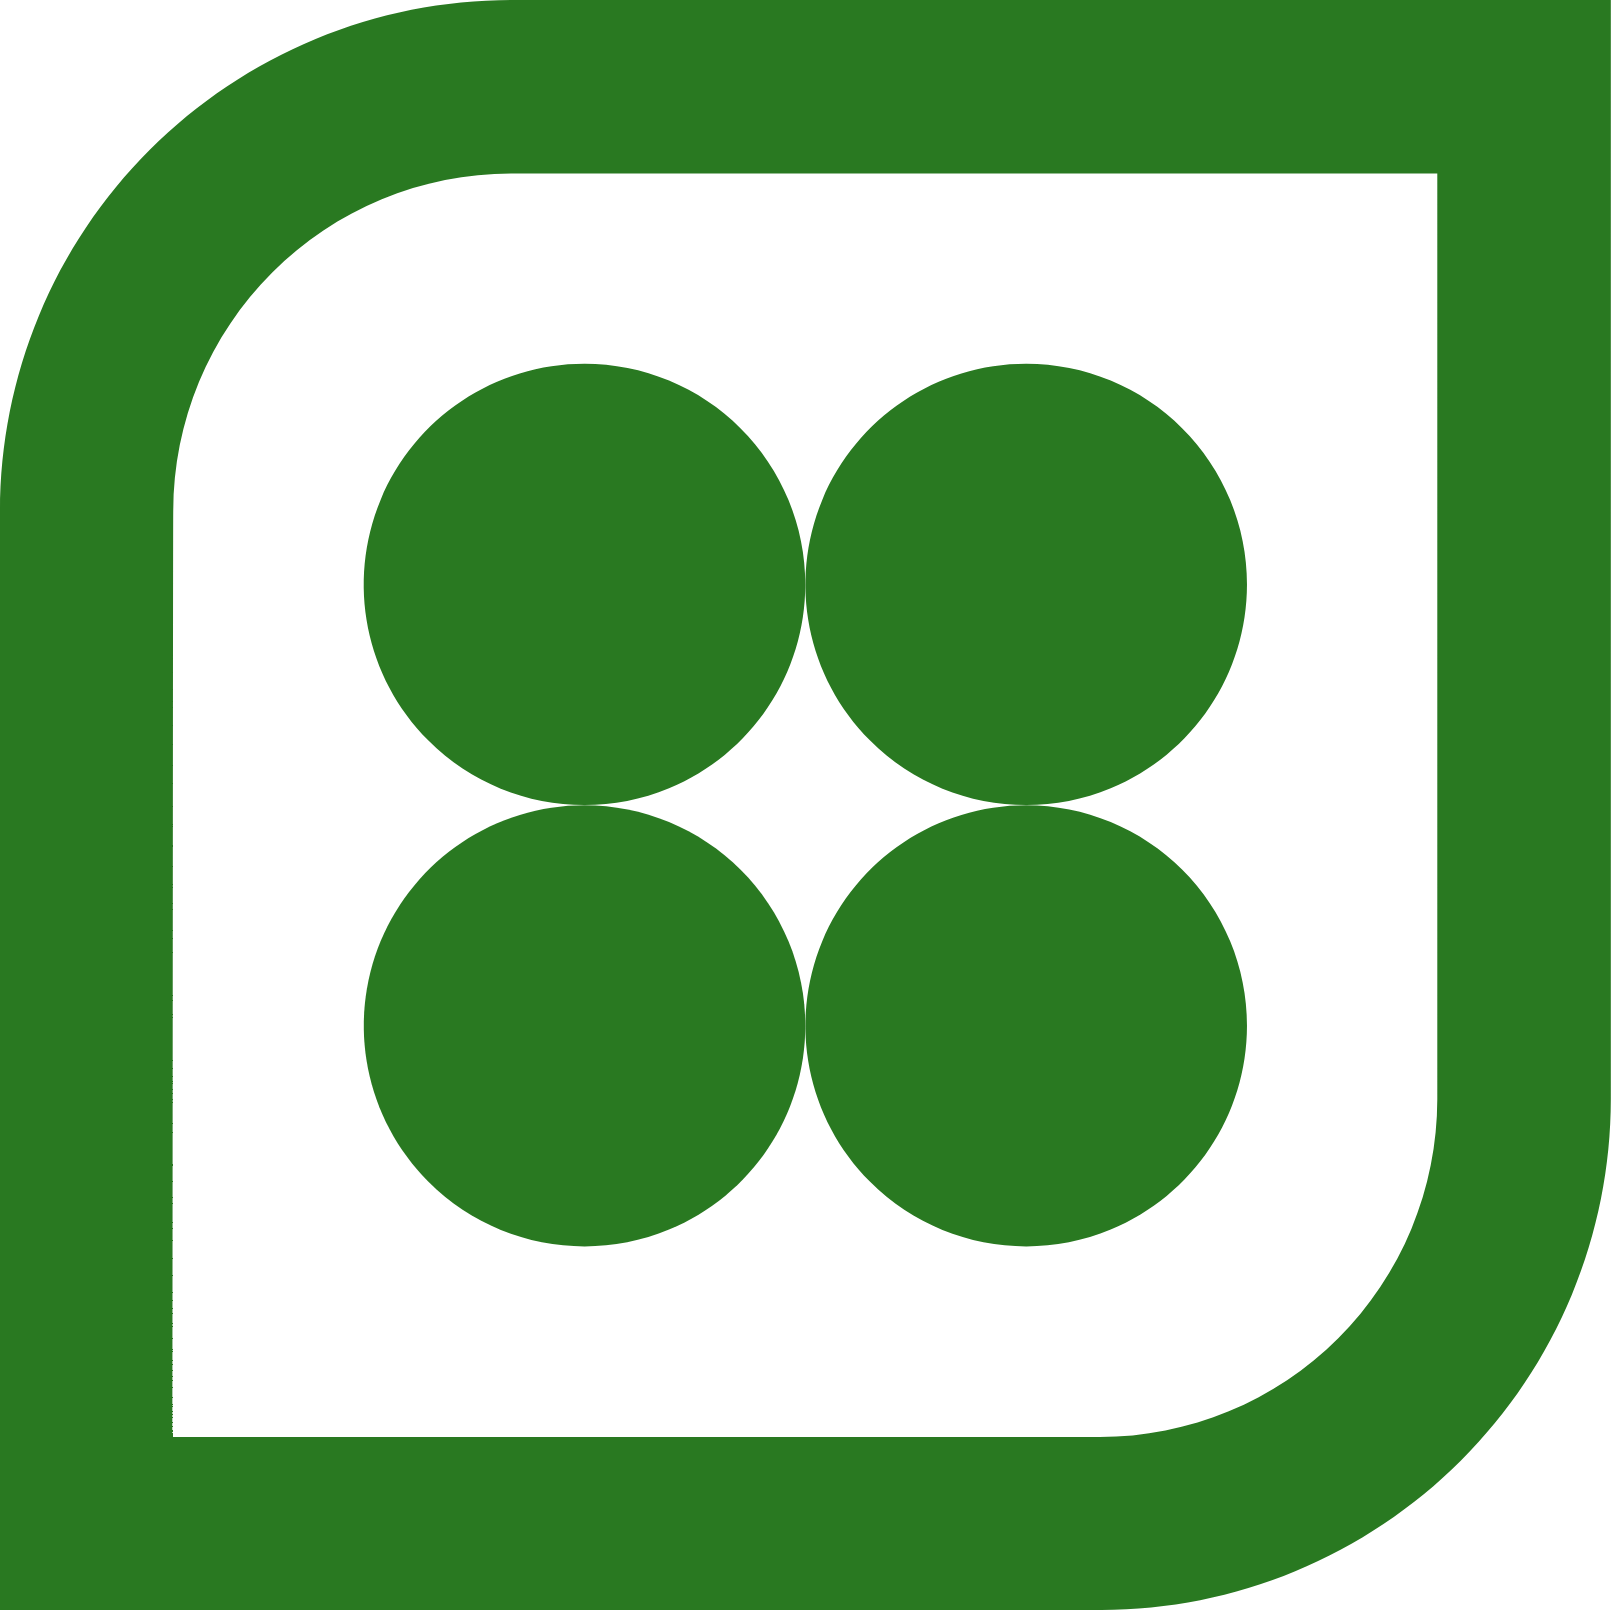 Capstone Green Energy logo (PNG transparent)